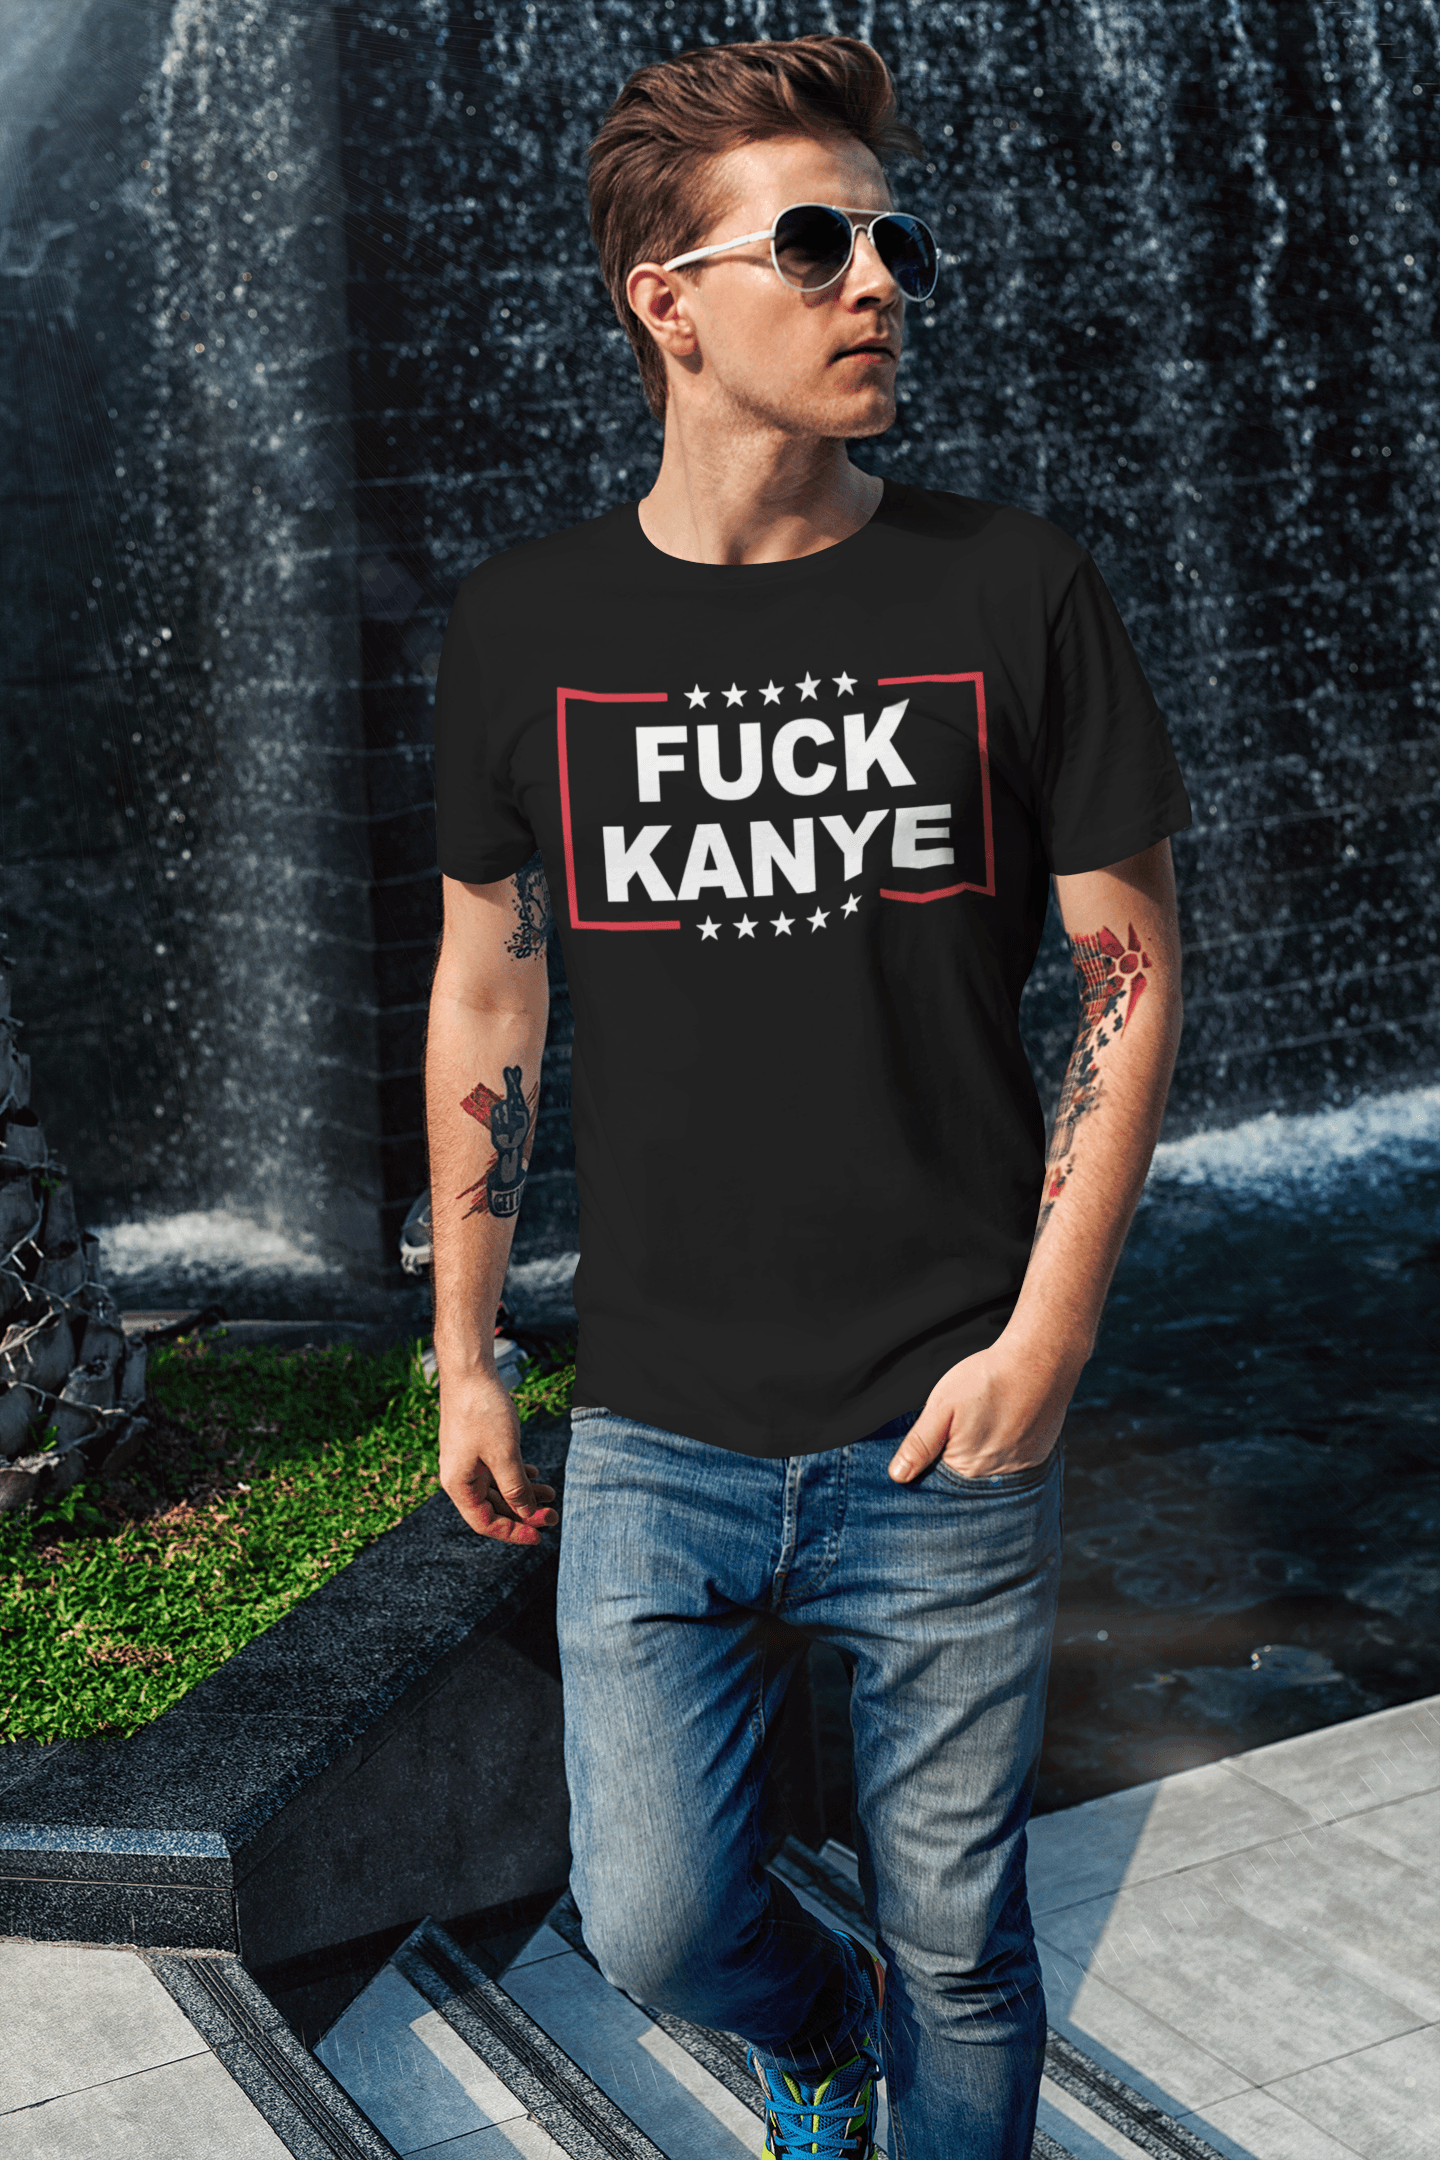 West T-Shirt F*#! Kanye Short Sleeve Top Koala Unisex Tee - TopKoalaTee